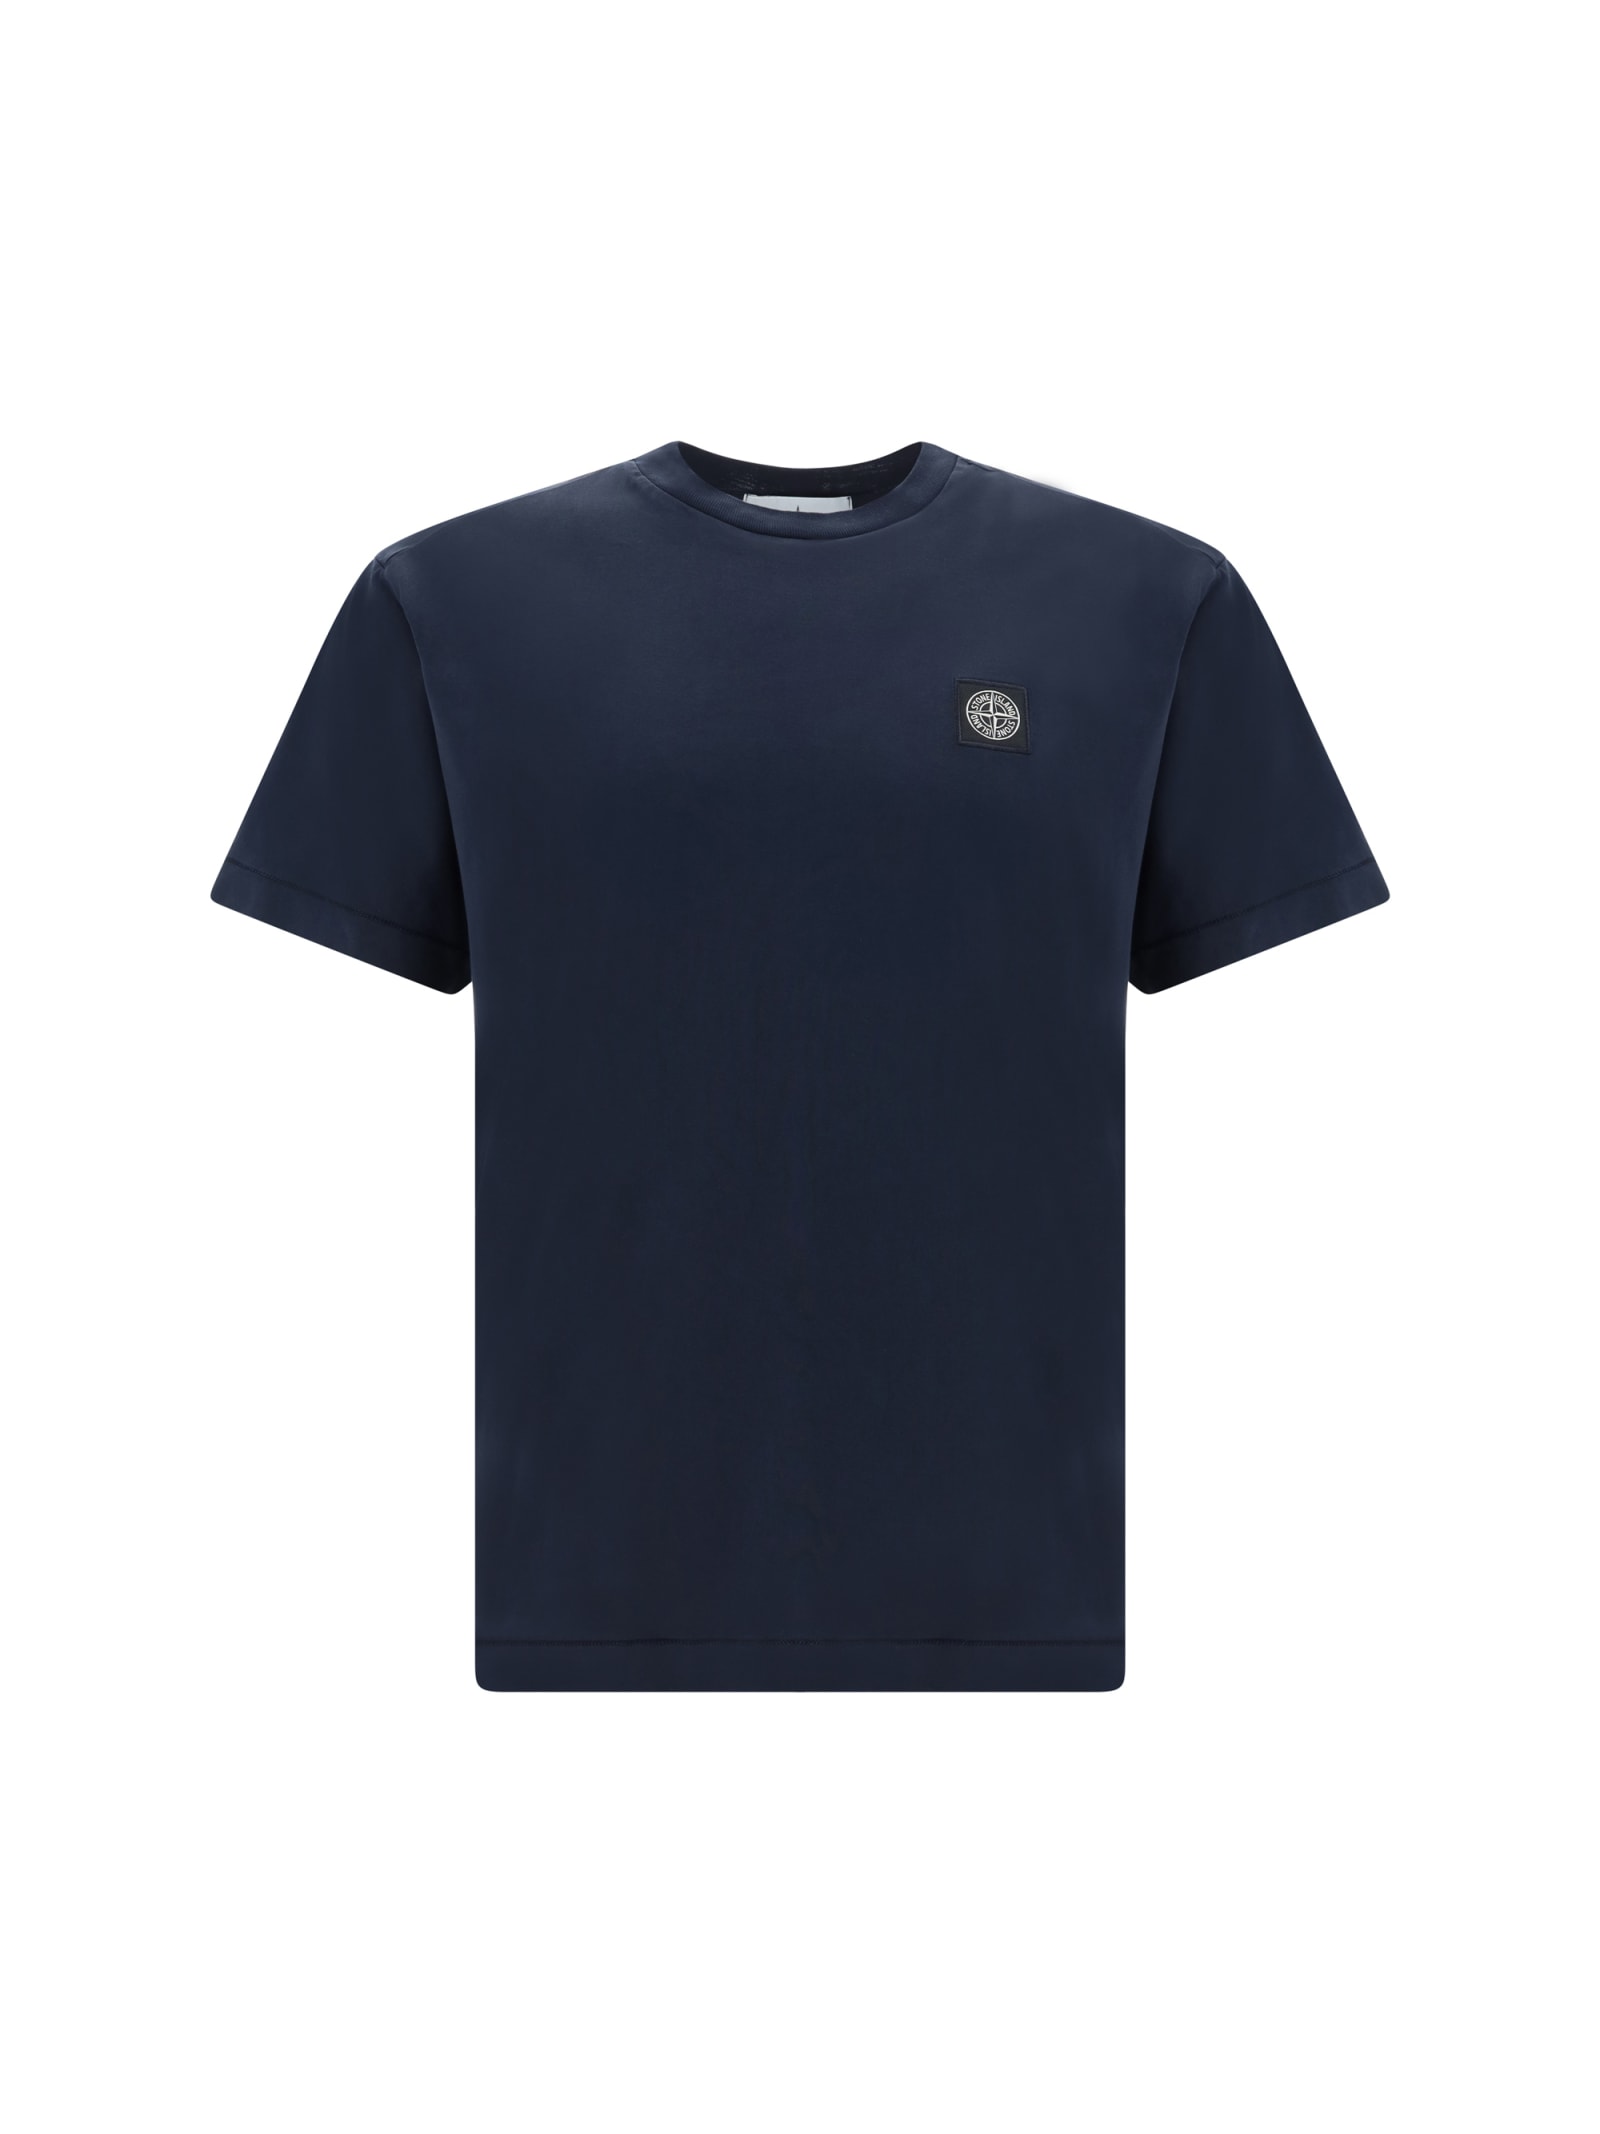 Stone Island T-shirt In Navy Blue